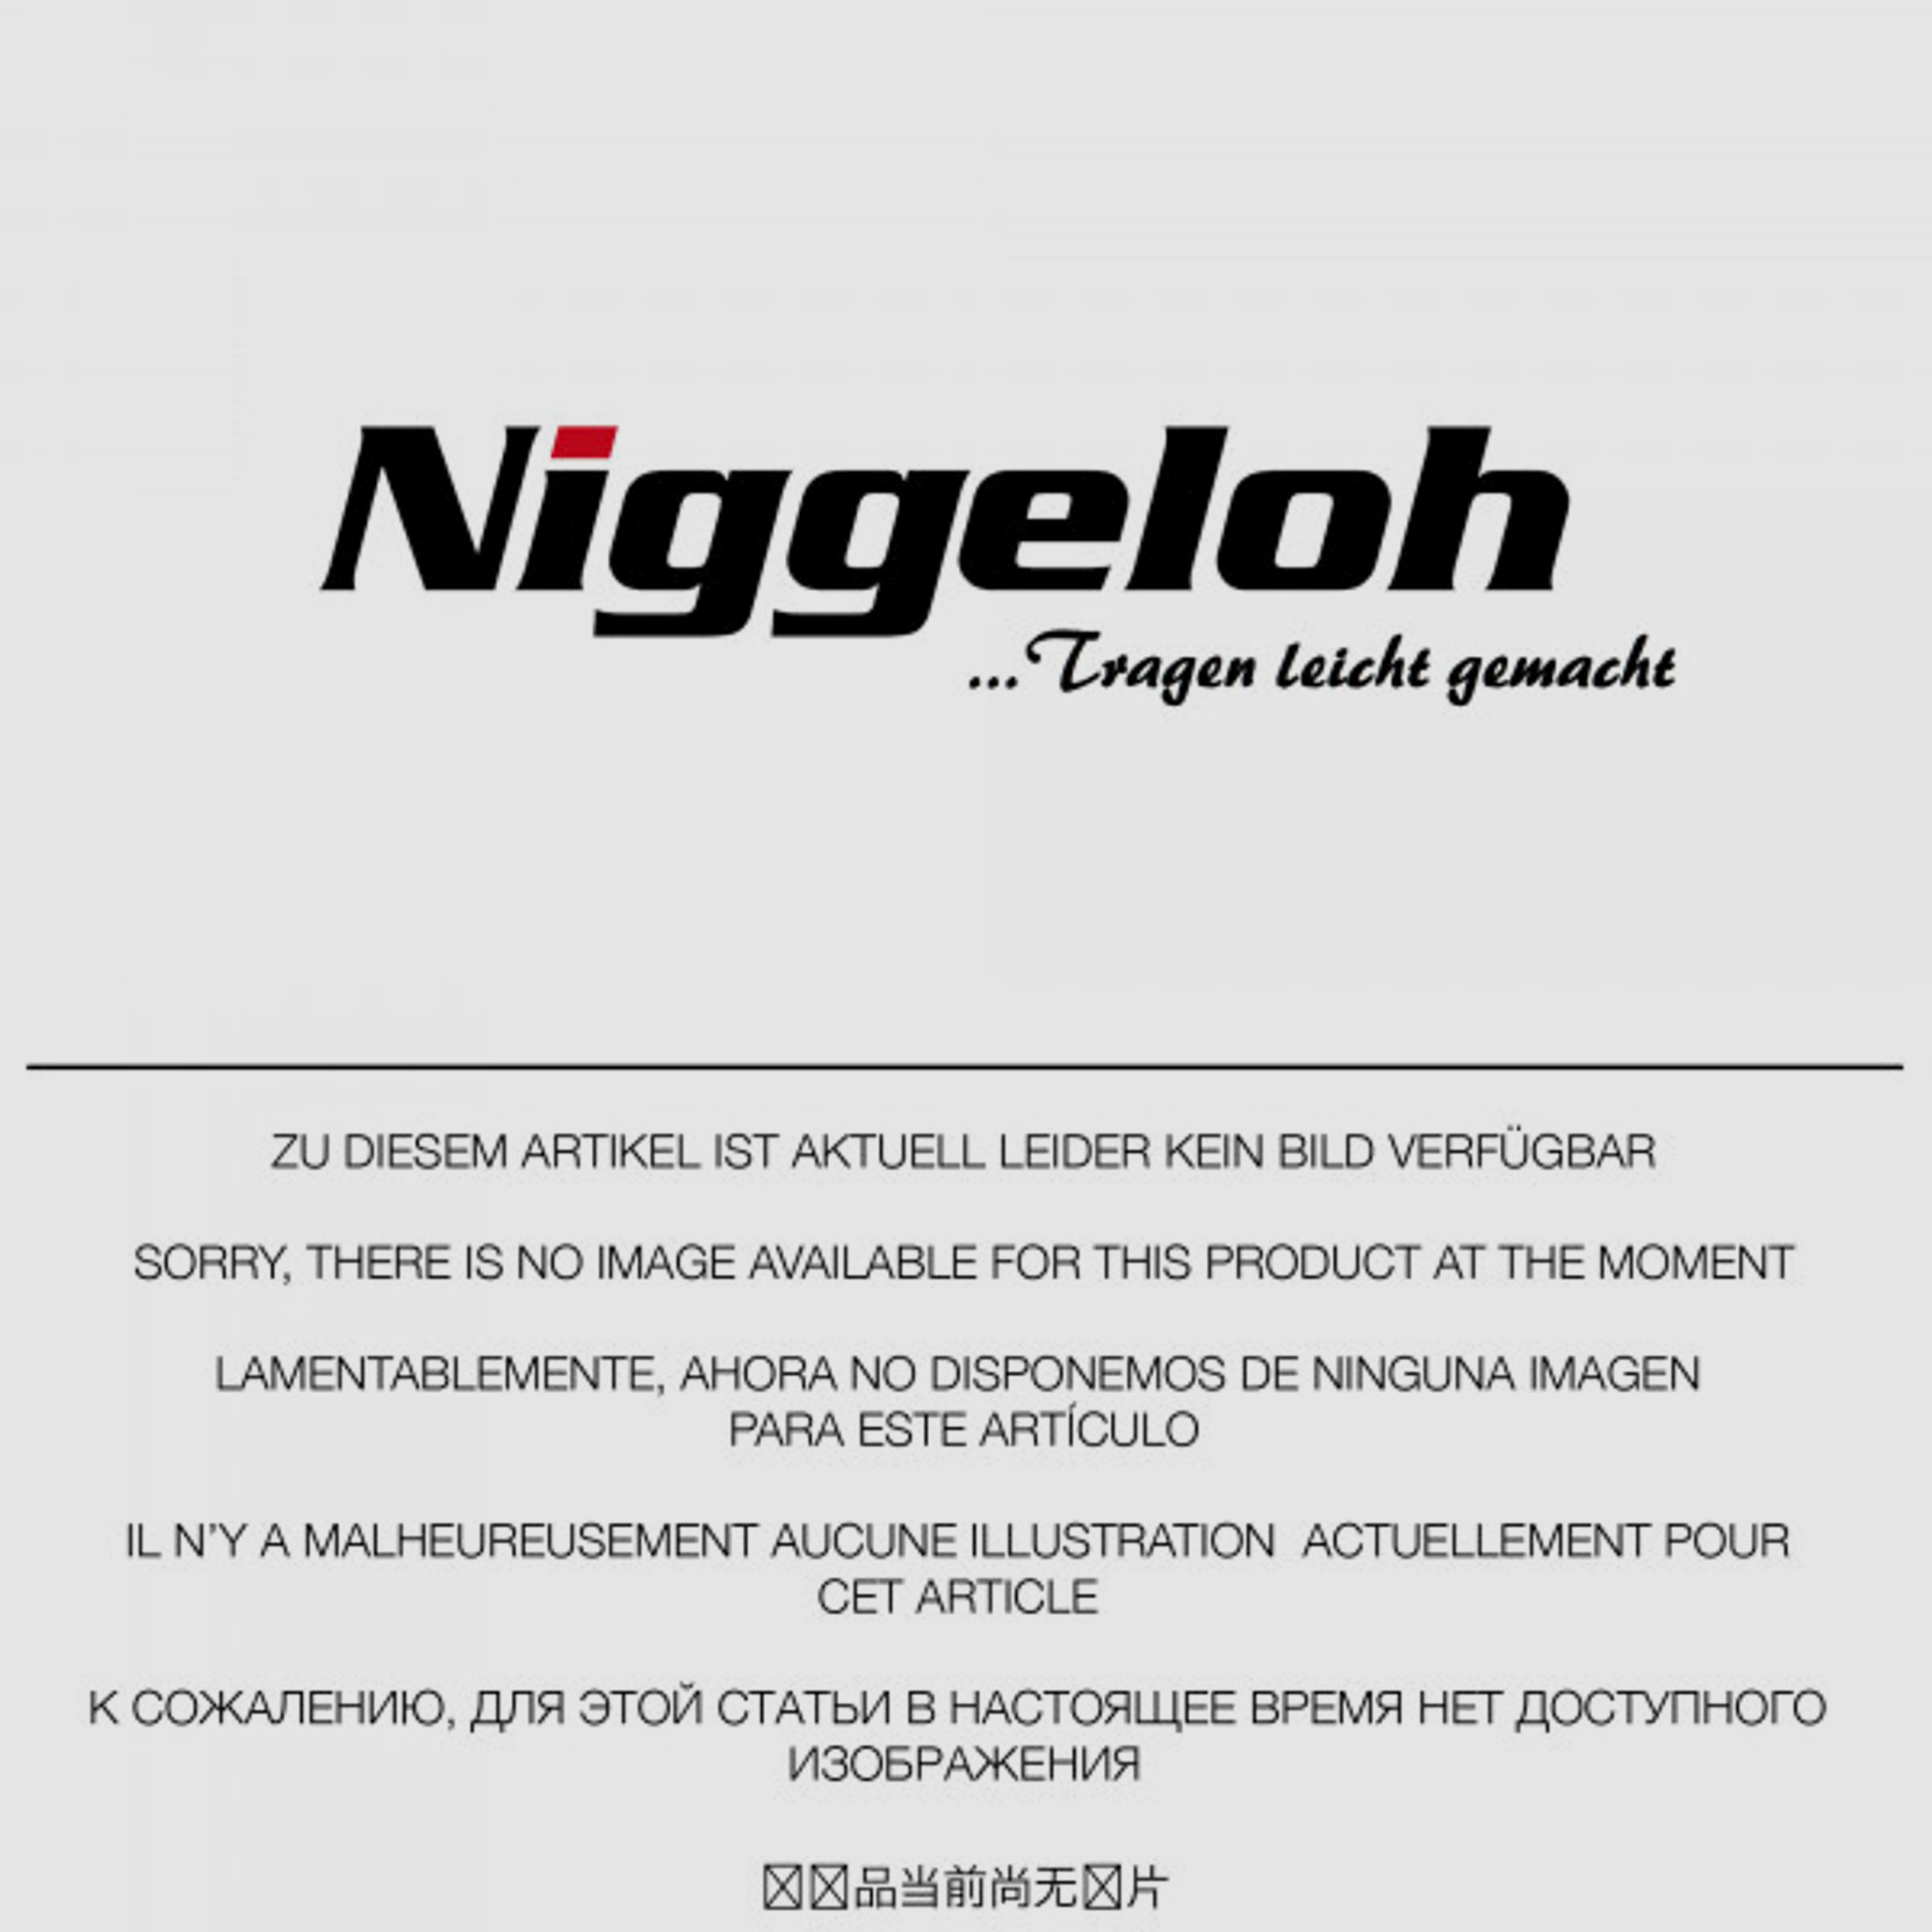 Niggeloh Rucksackgewehrgurt #406600101